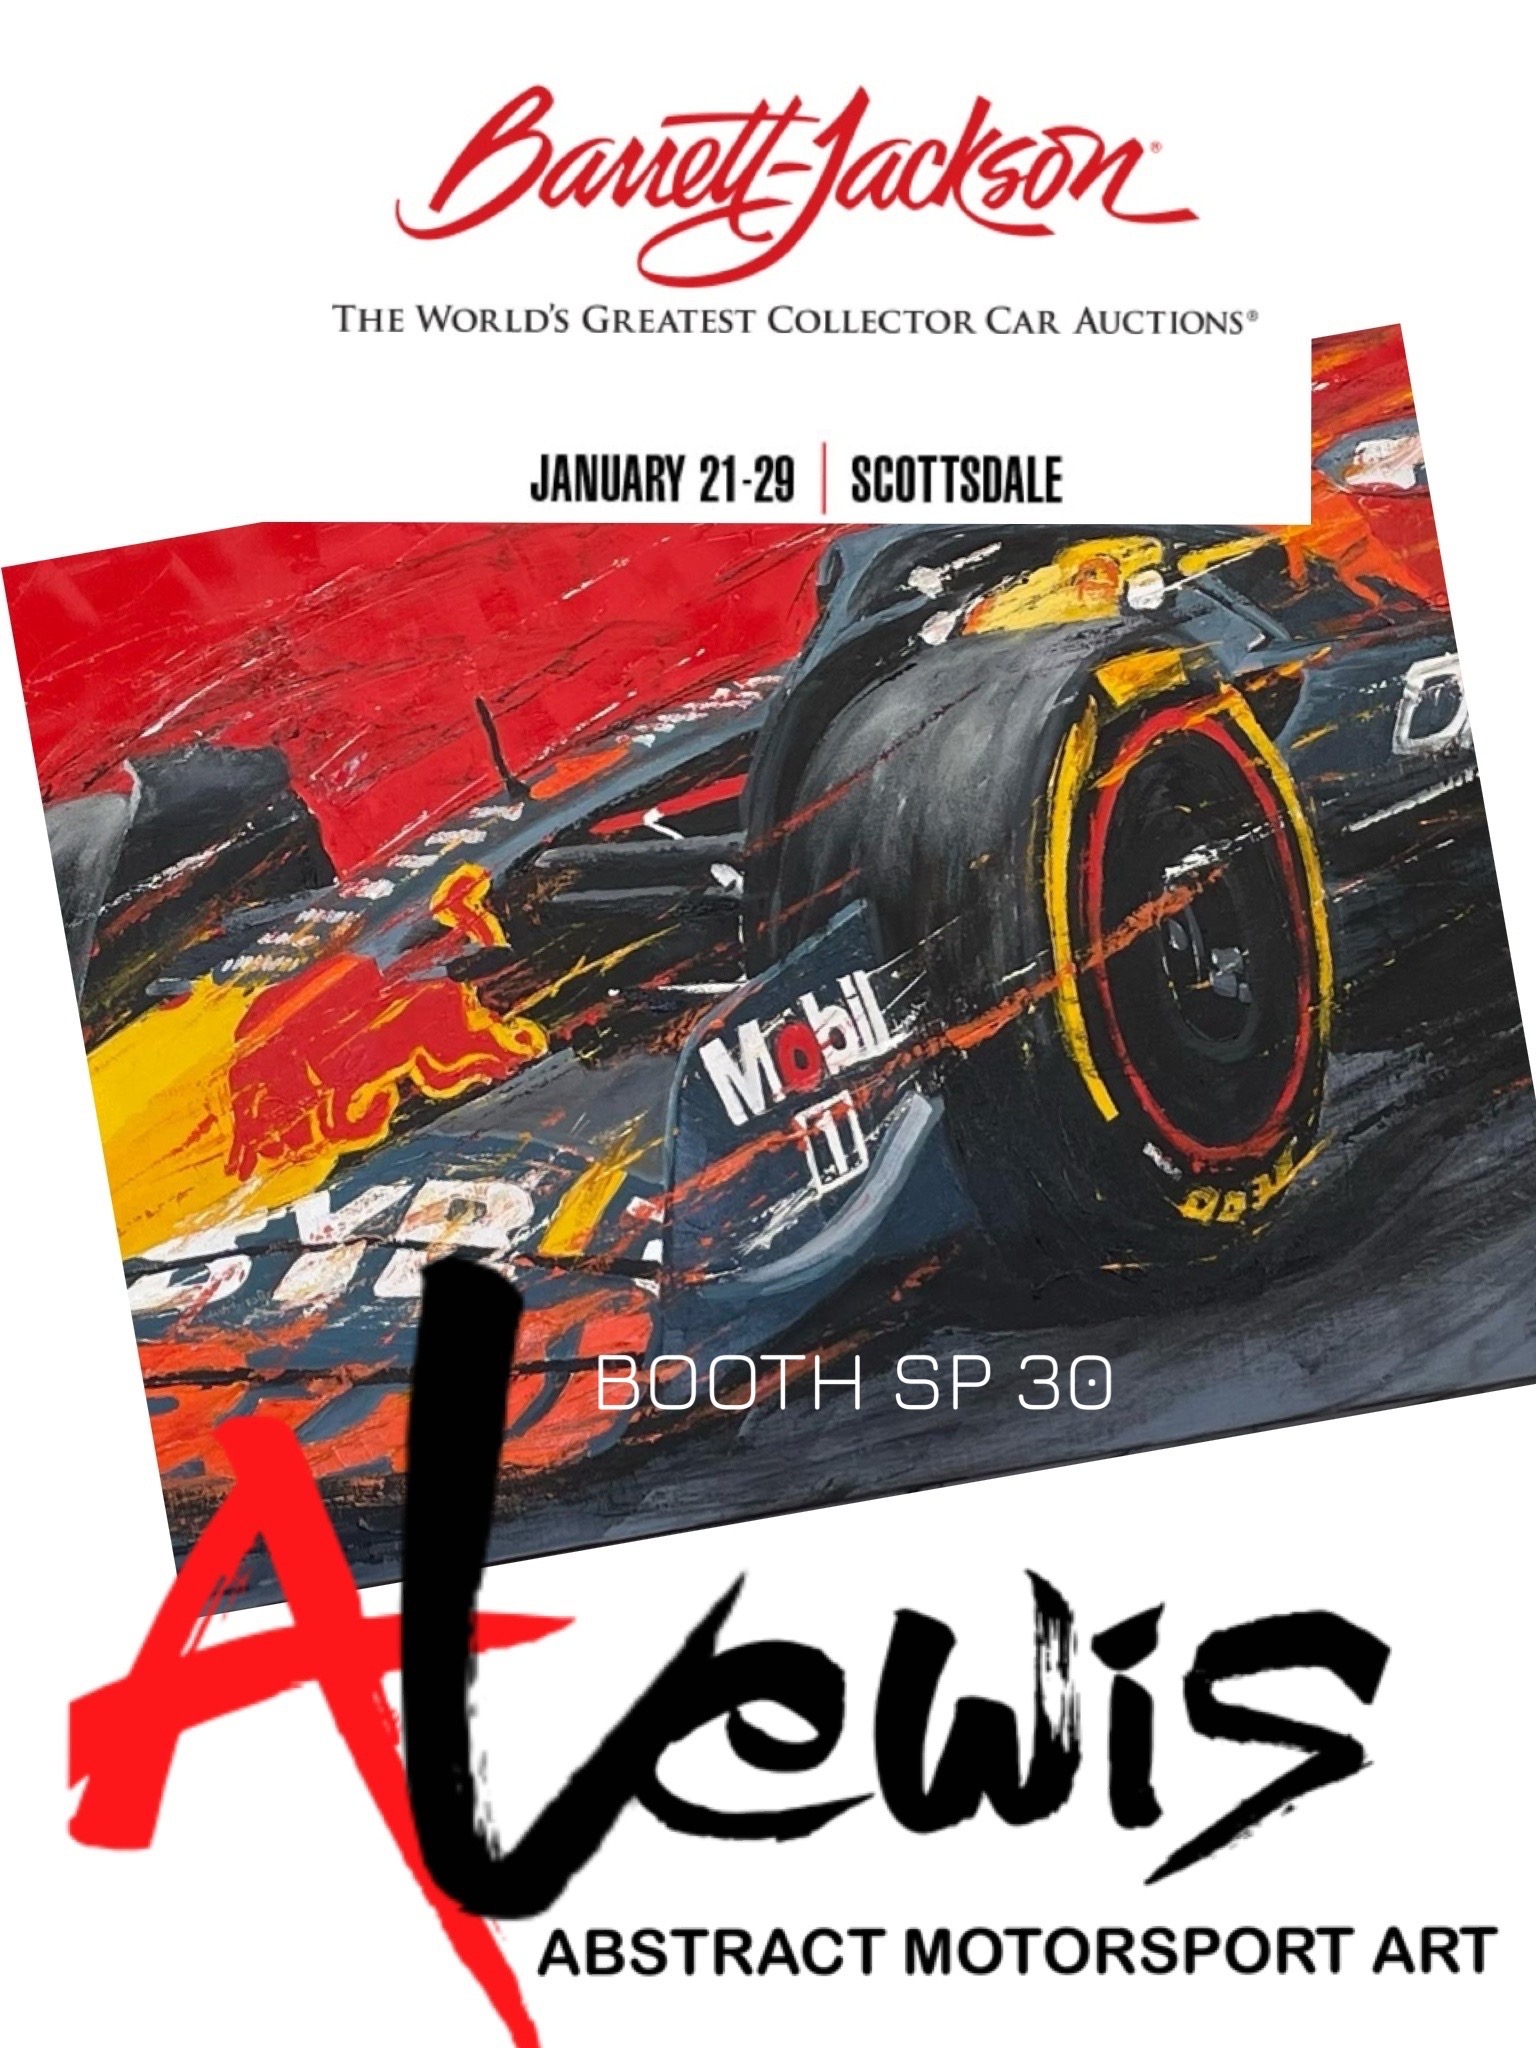 Abstract Motorsport Art Splash Image